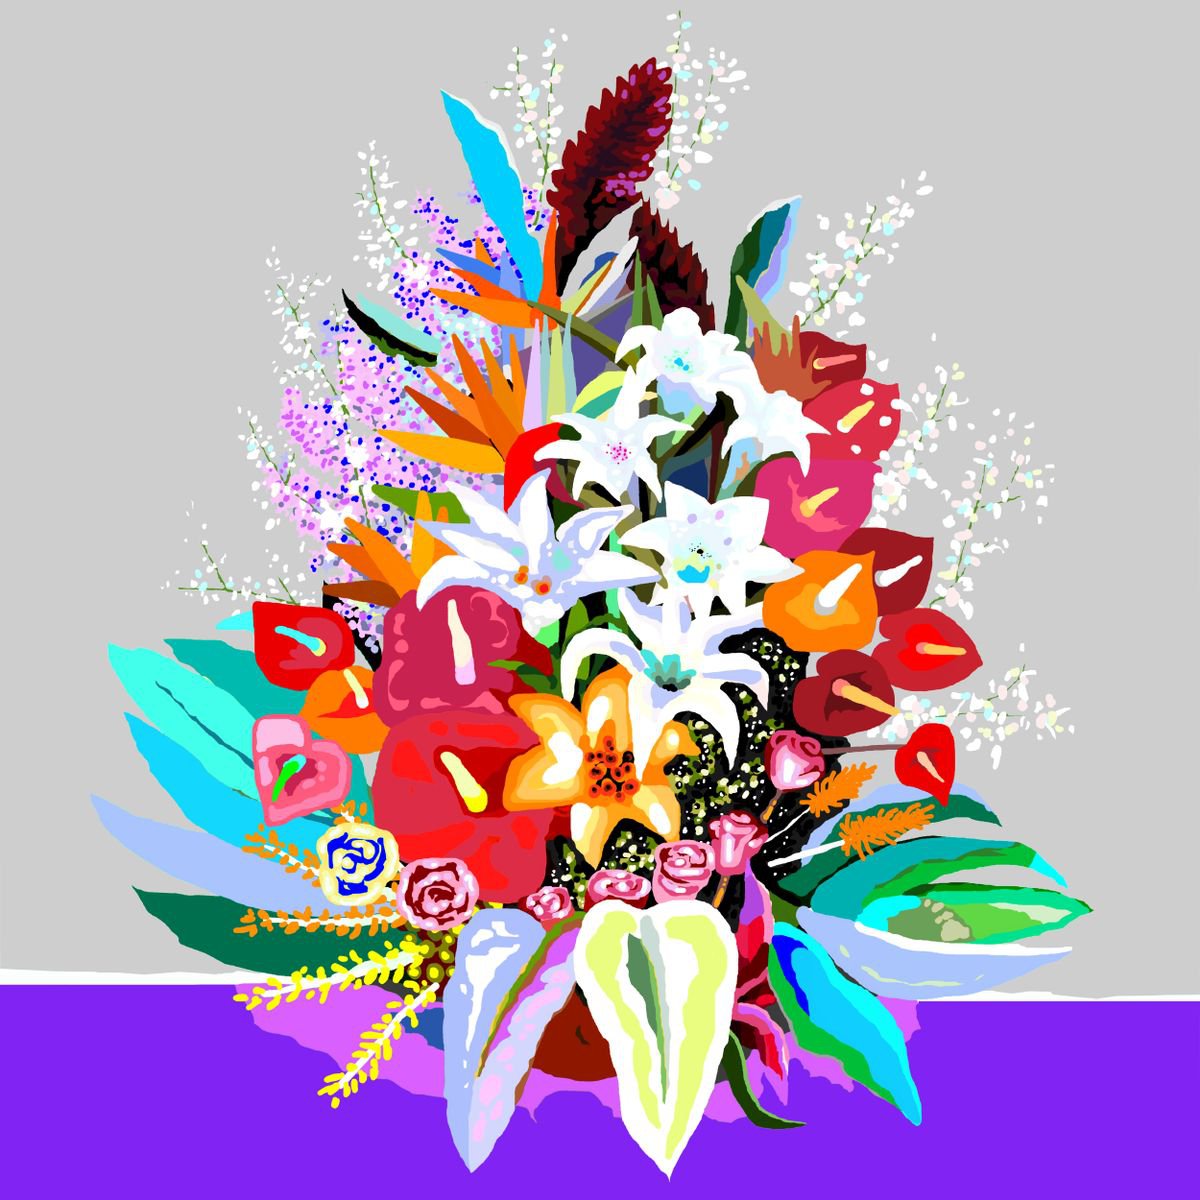 Flowers III/ Flores III (pop art, floral) by Alejos - Pop Art landscapes